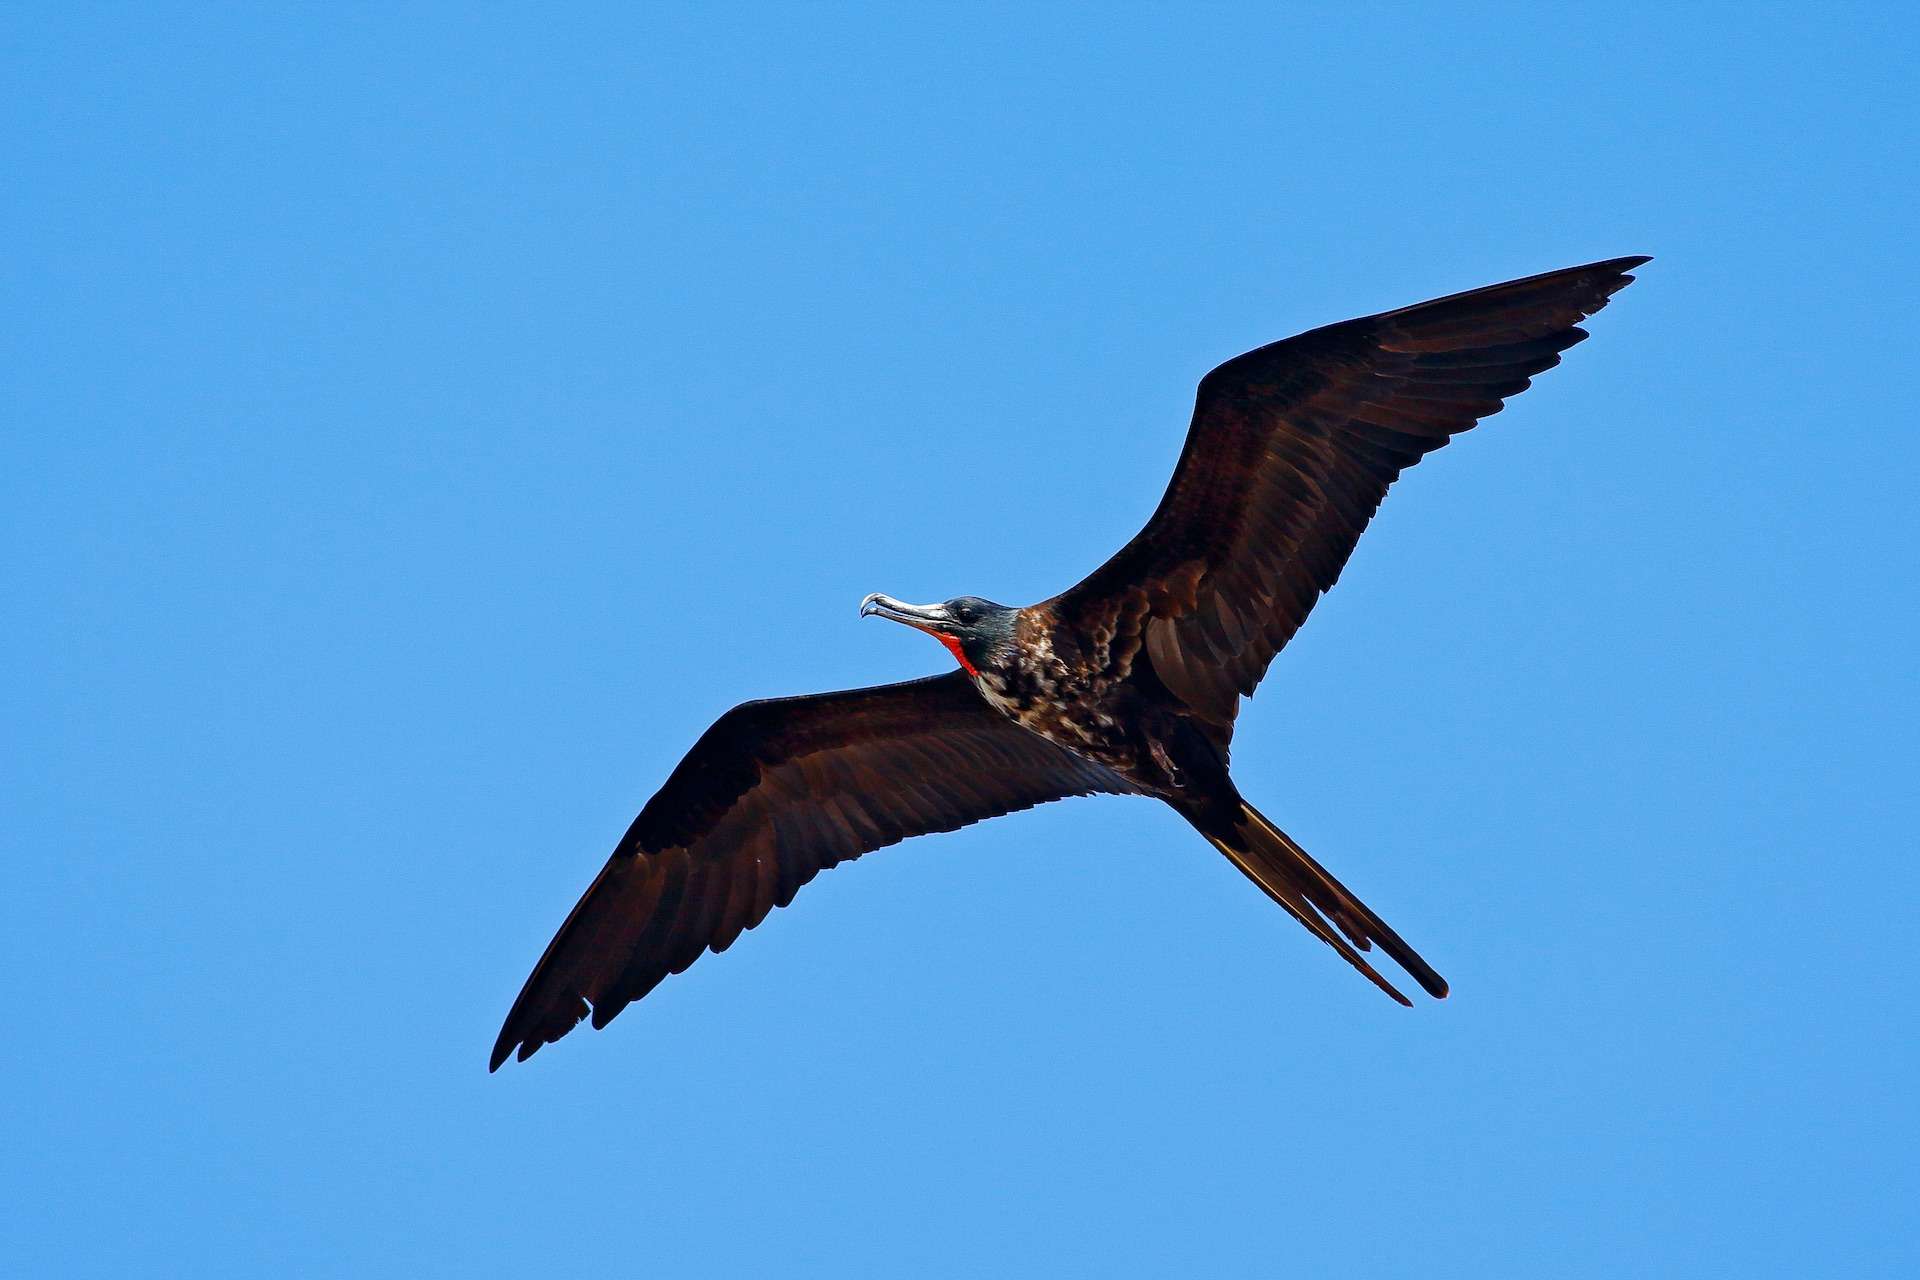 Magnificent Frigatebird, Fregata magnificens, flying bird in blue sky. Tropical sea bird from Costa Rica coast. Wildlife scene from nature.